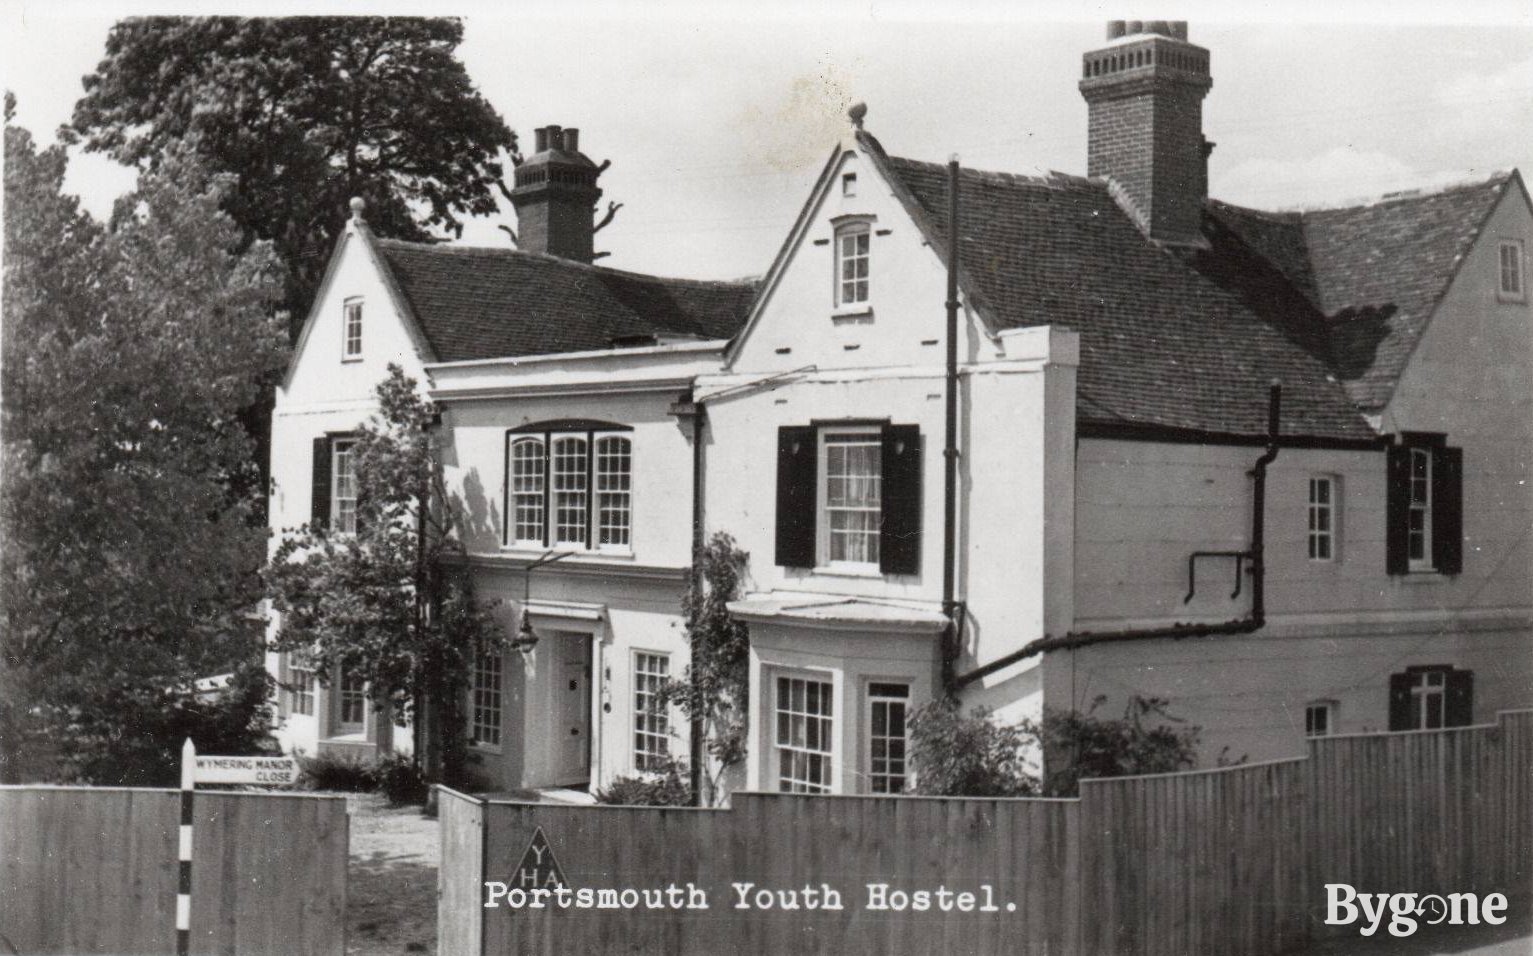 Portsmouth Youth Hostel (Wymering Manor)